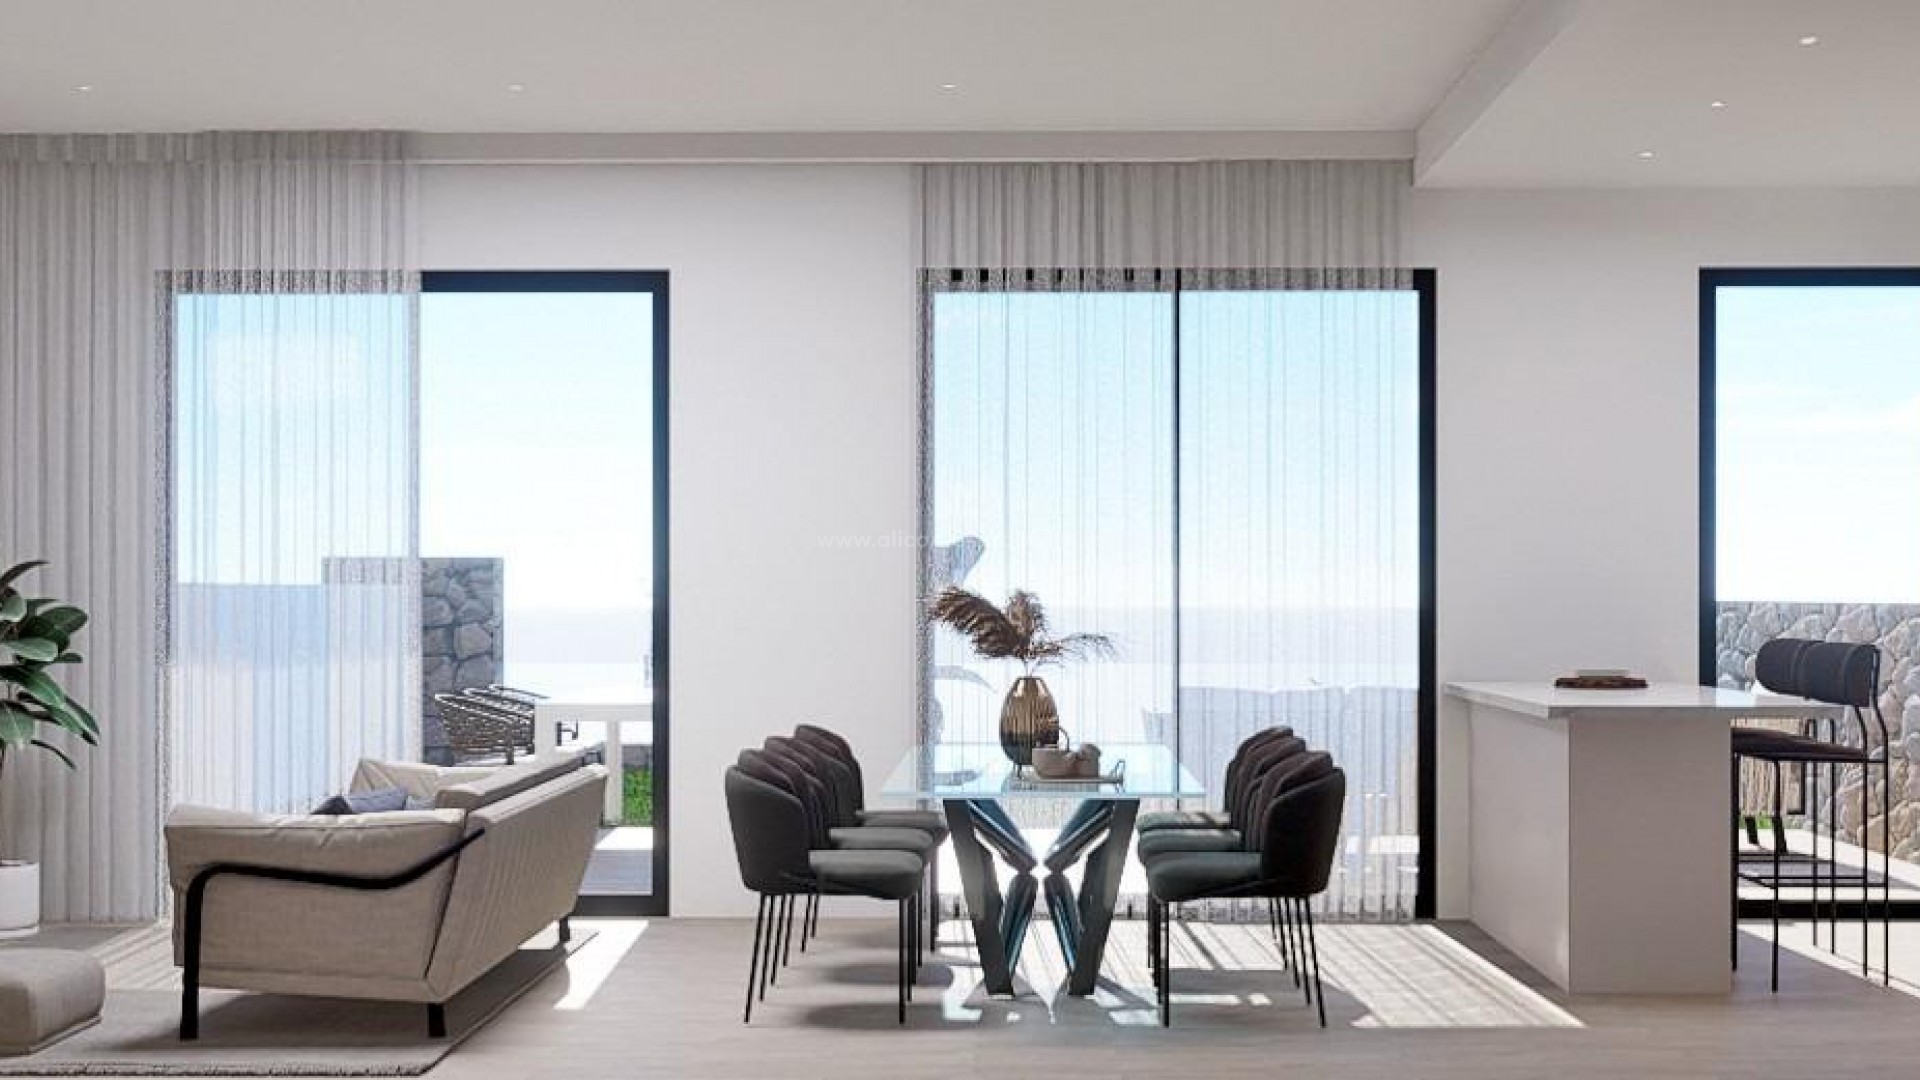 New built exclusive high standard residential complex in Balcon de Finestrat, 2/3 bedrooms, 2 bathrooms. Possibilities for solarium, garden and pool.